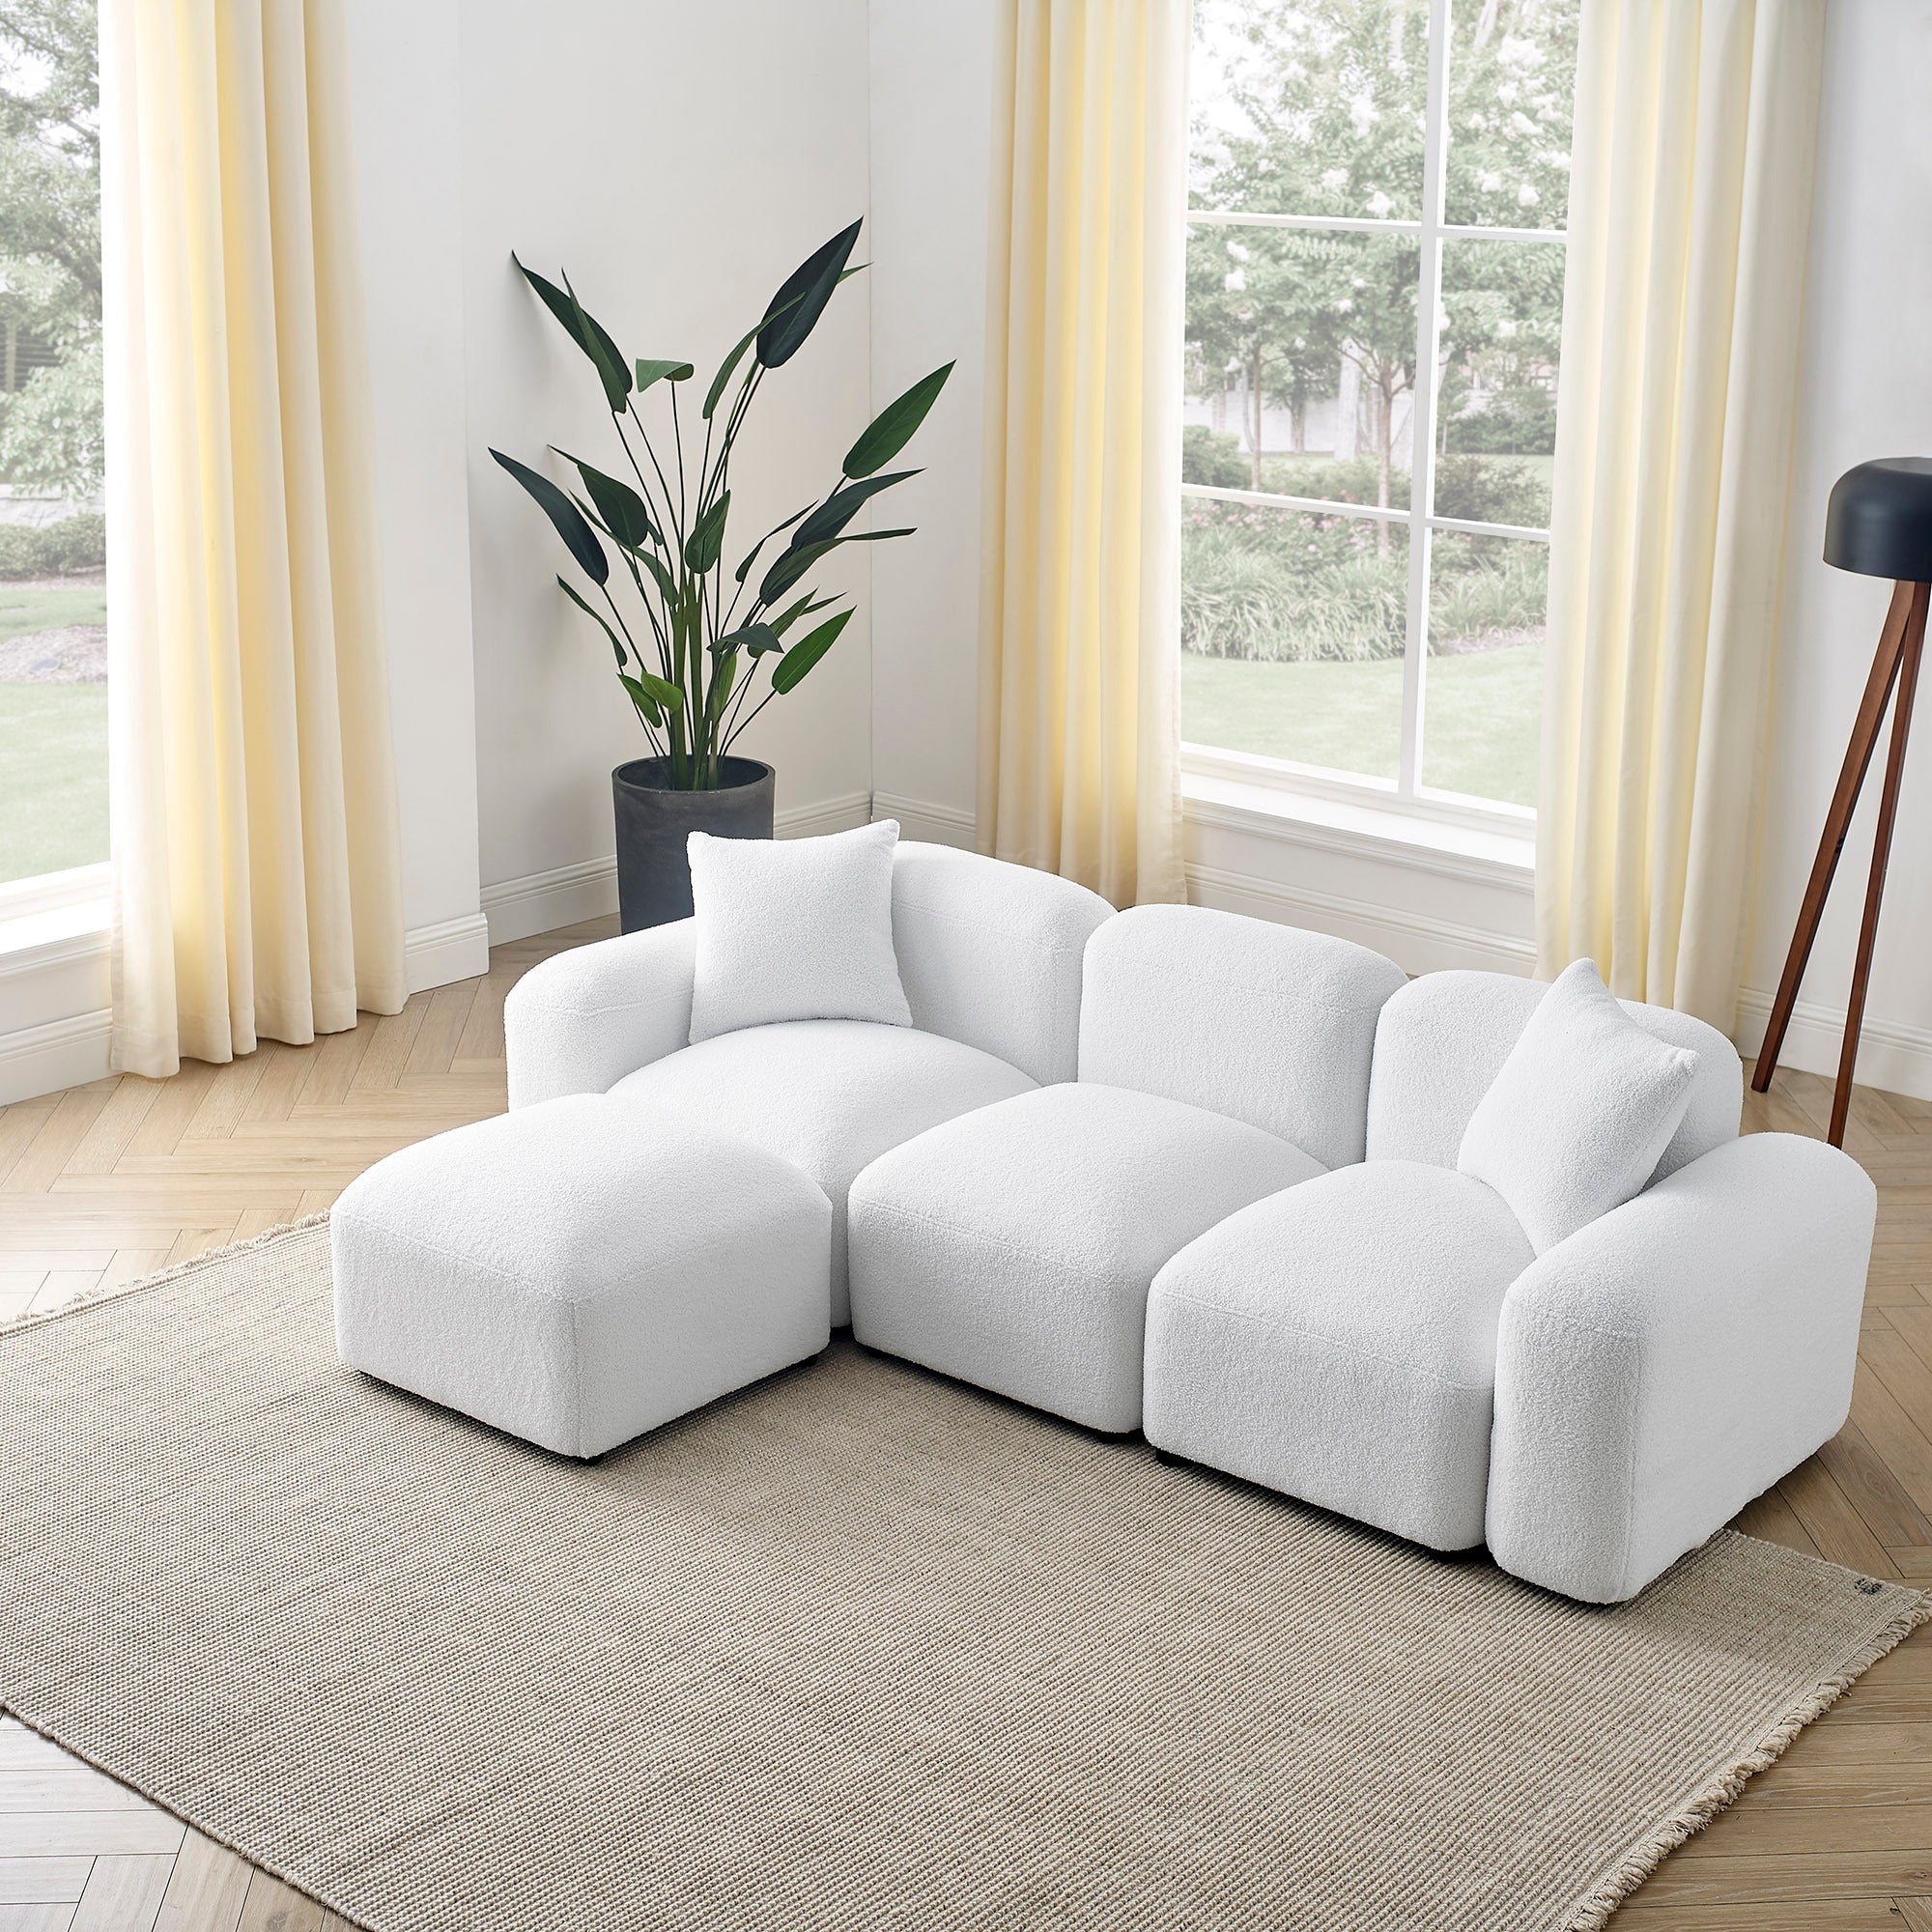 Cloudy: Luxury Lounge Sofa